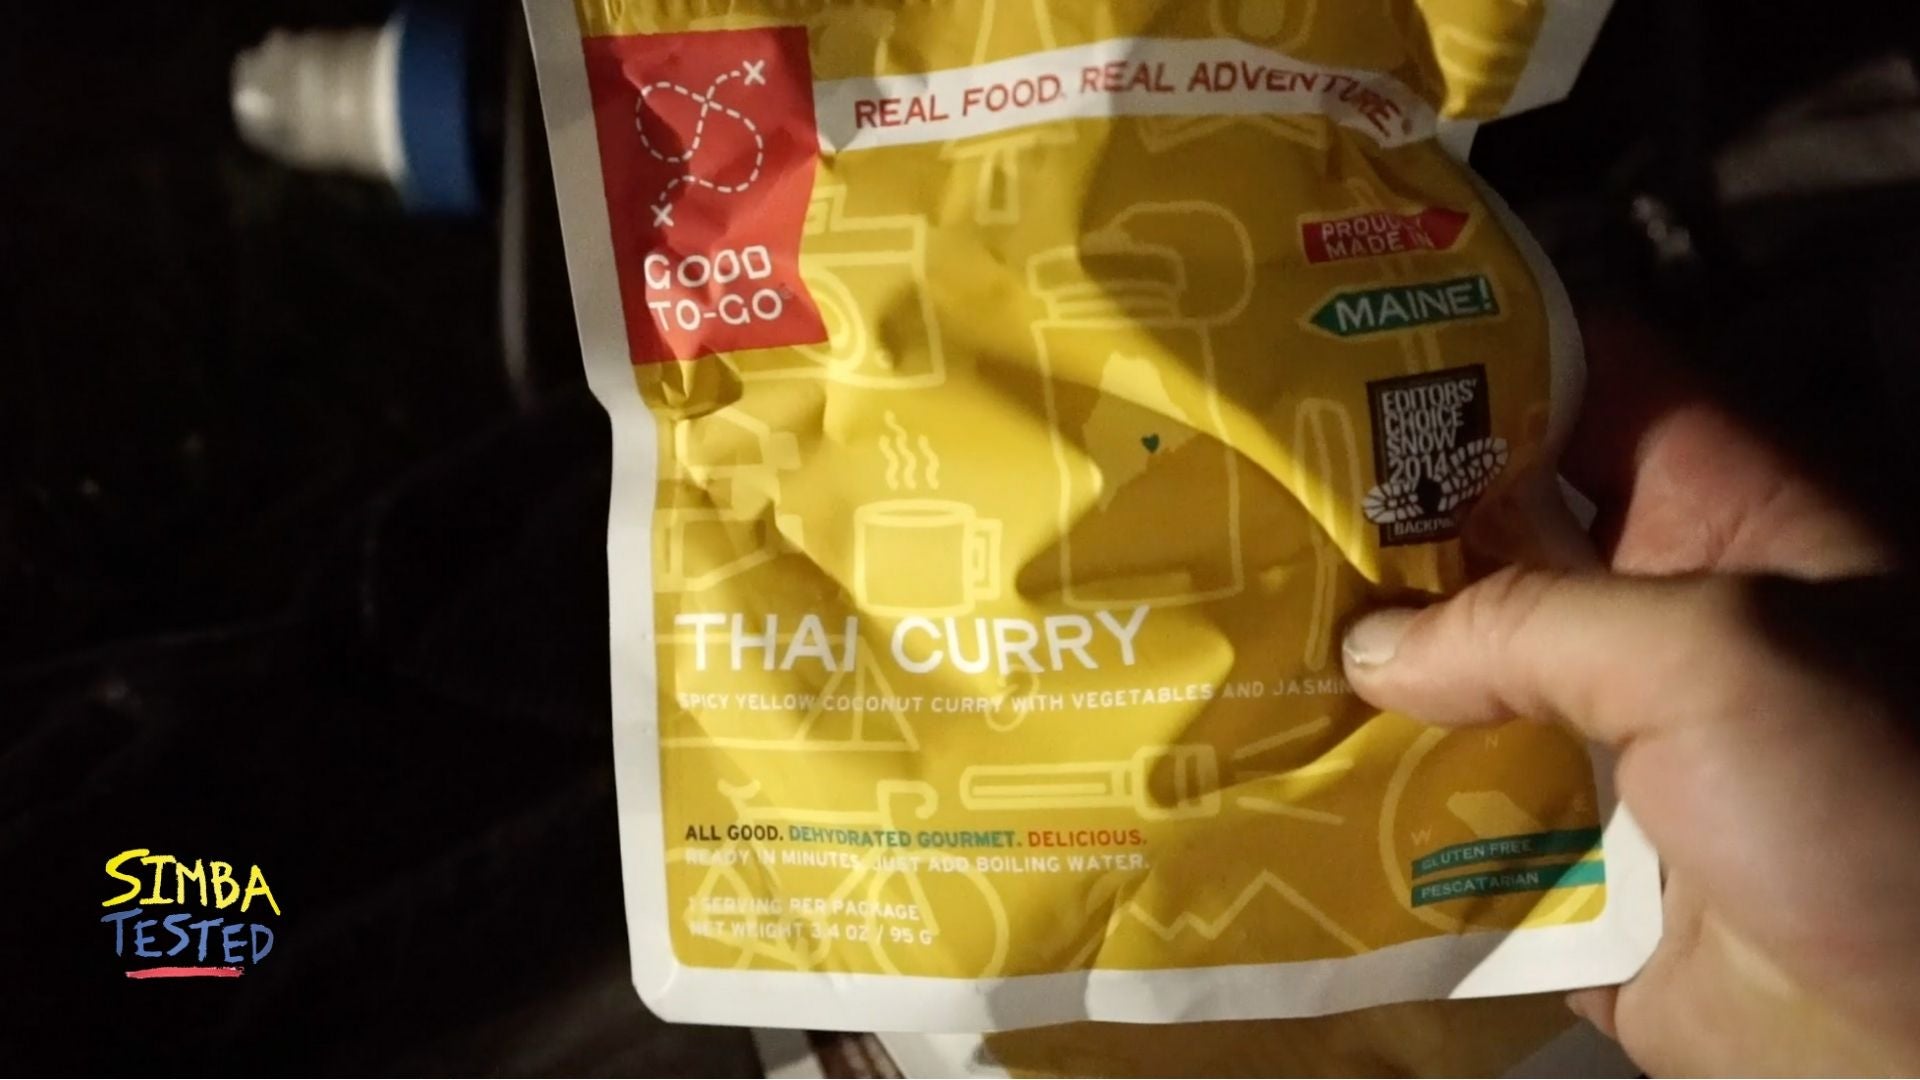 Simba Tested - GOOD TO GO Meals: Thai Curry vs Vegetable Korma